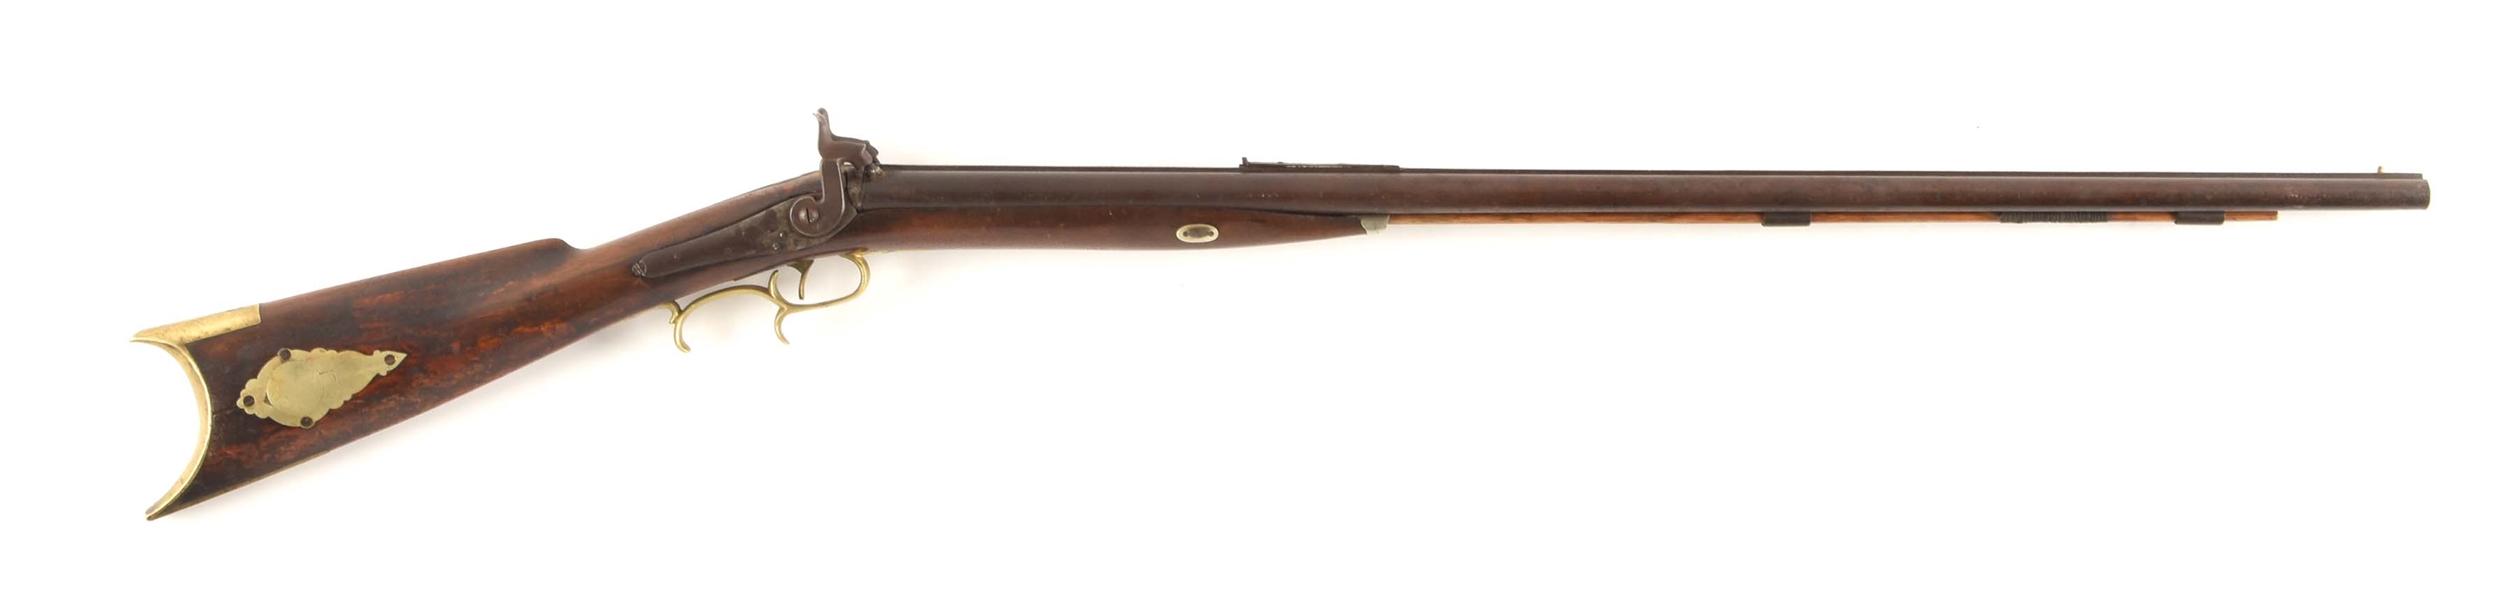 (A) PERCUSSION CAPE GUN BY G.W. BOWLBY.